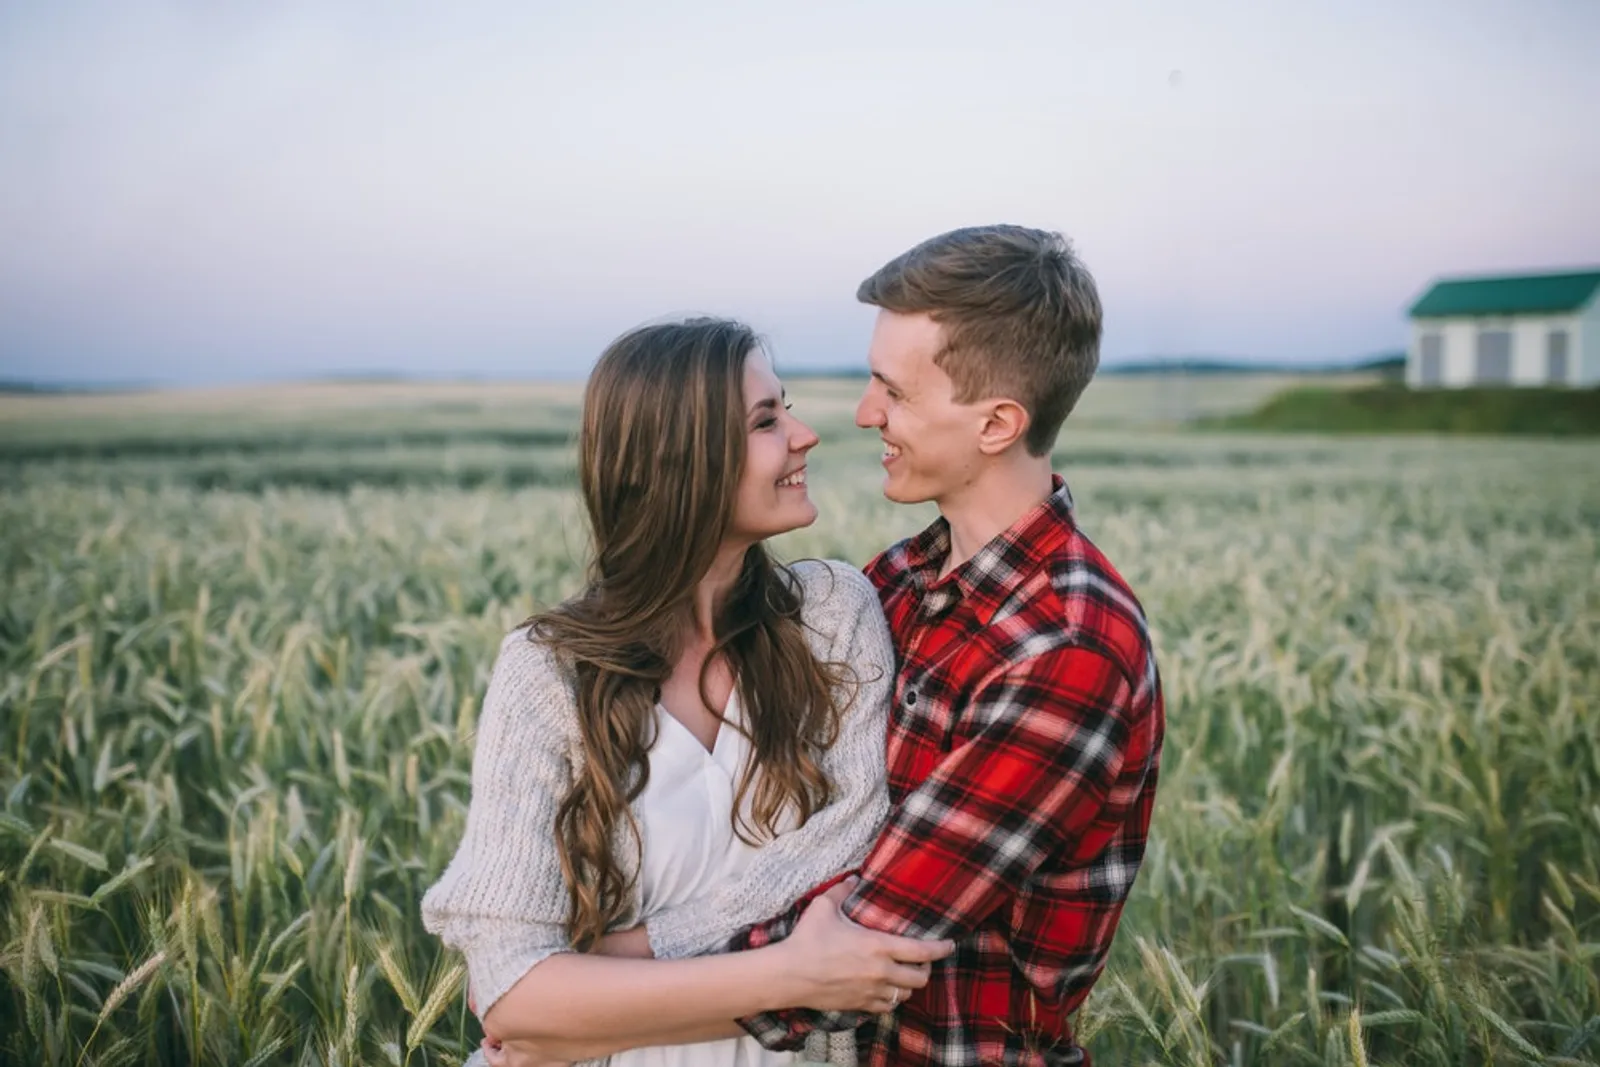 6 Pertanyaan Wajib untuk Pasangan Sebelum Mantap Menikahinya